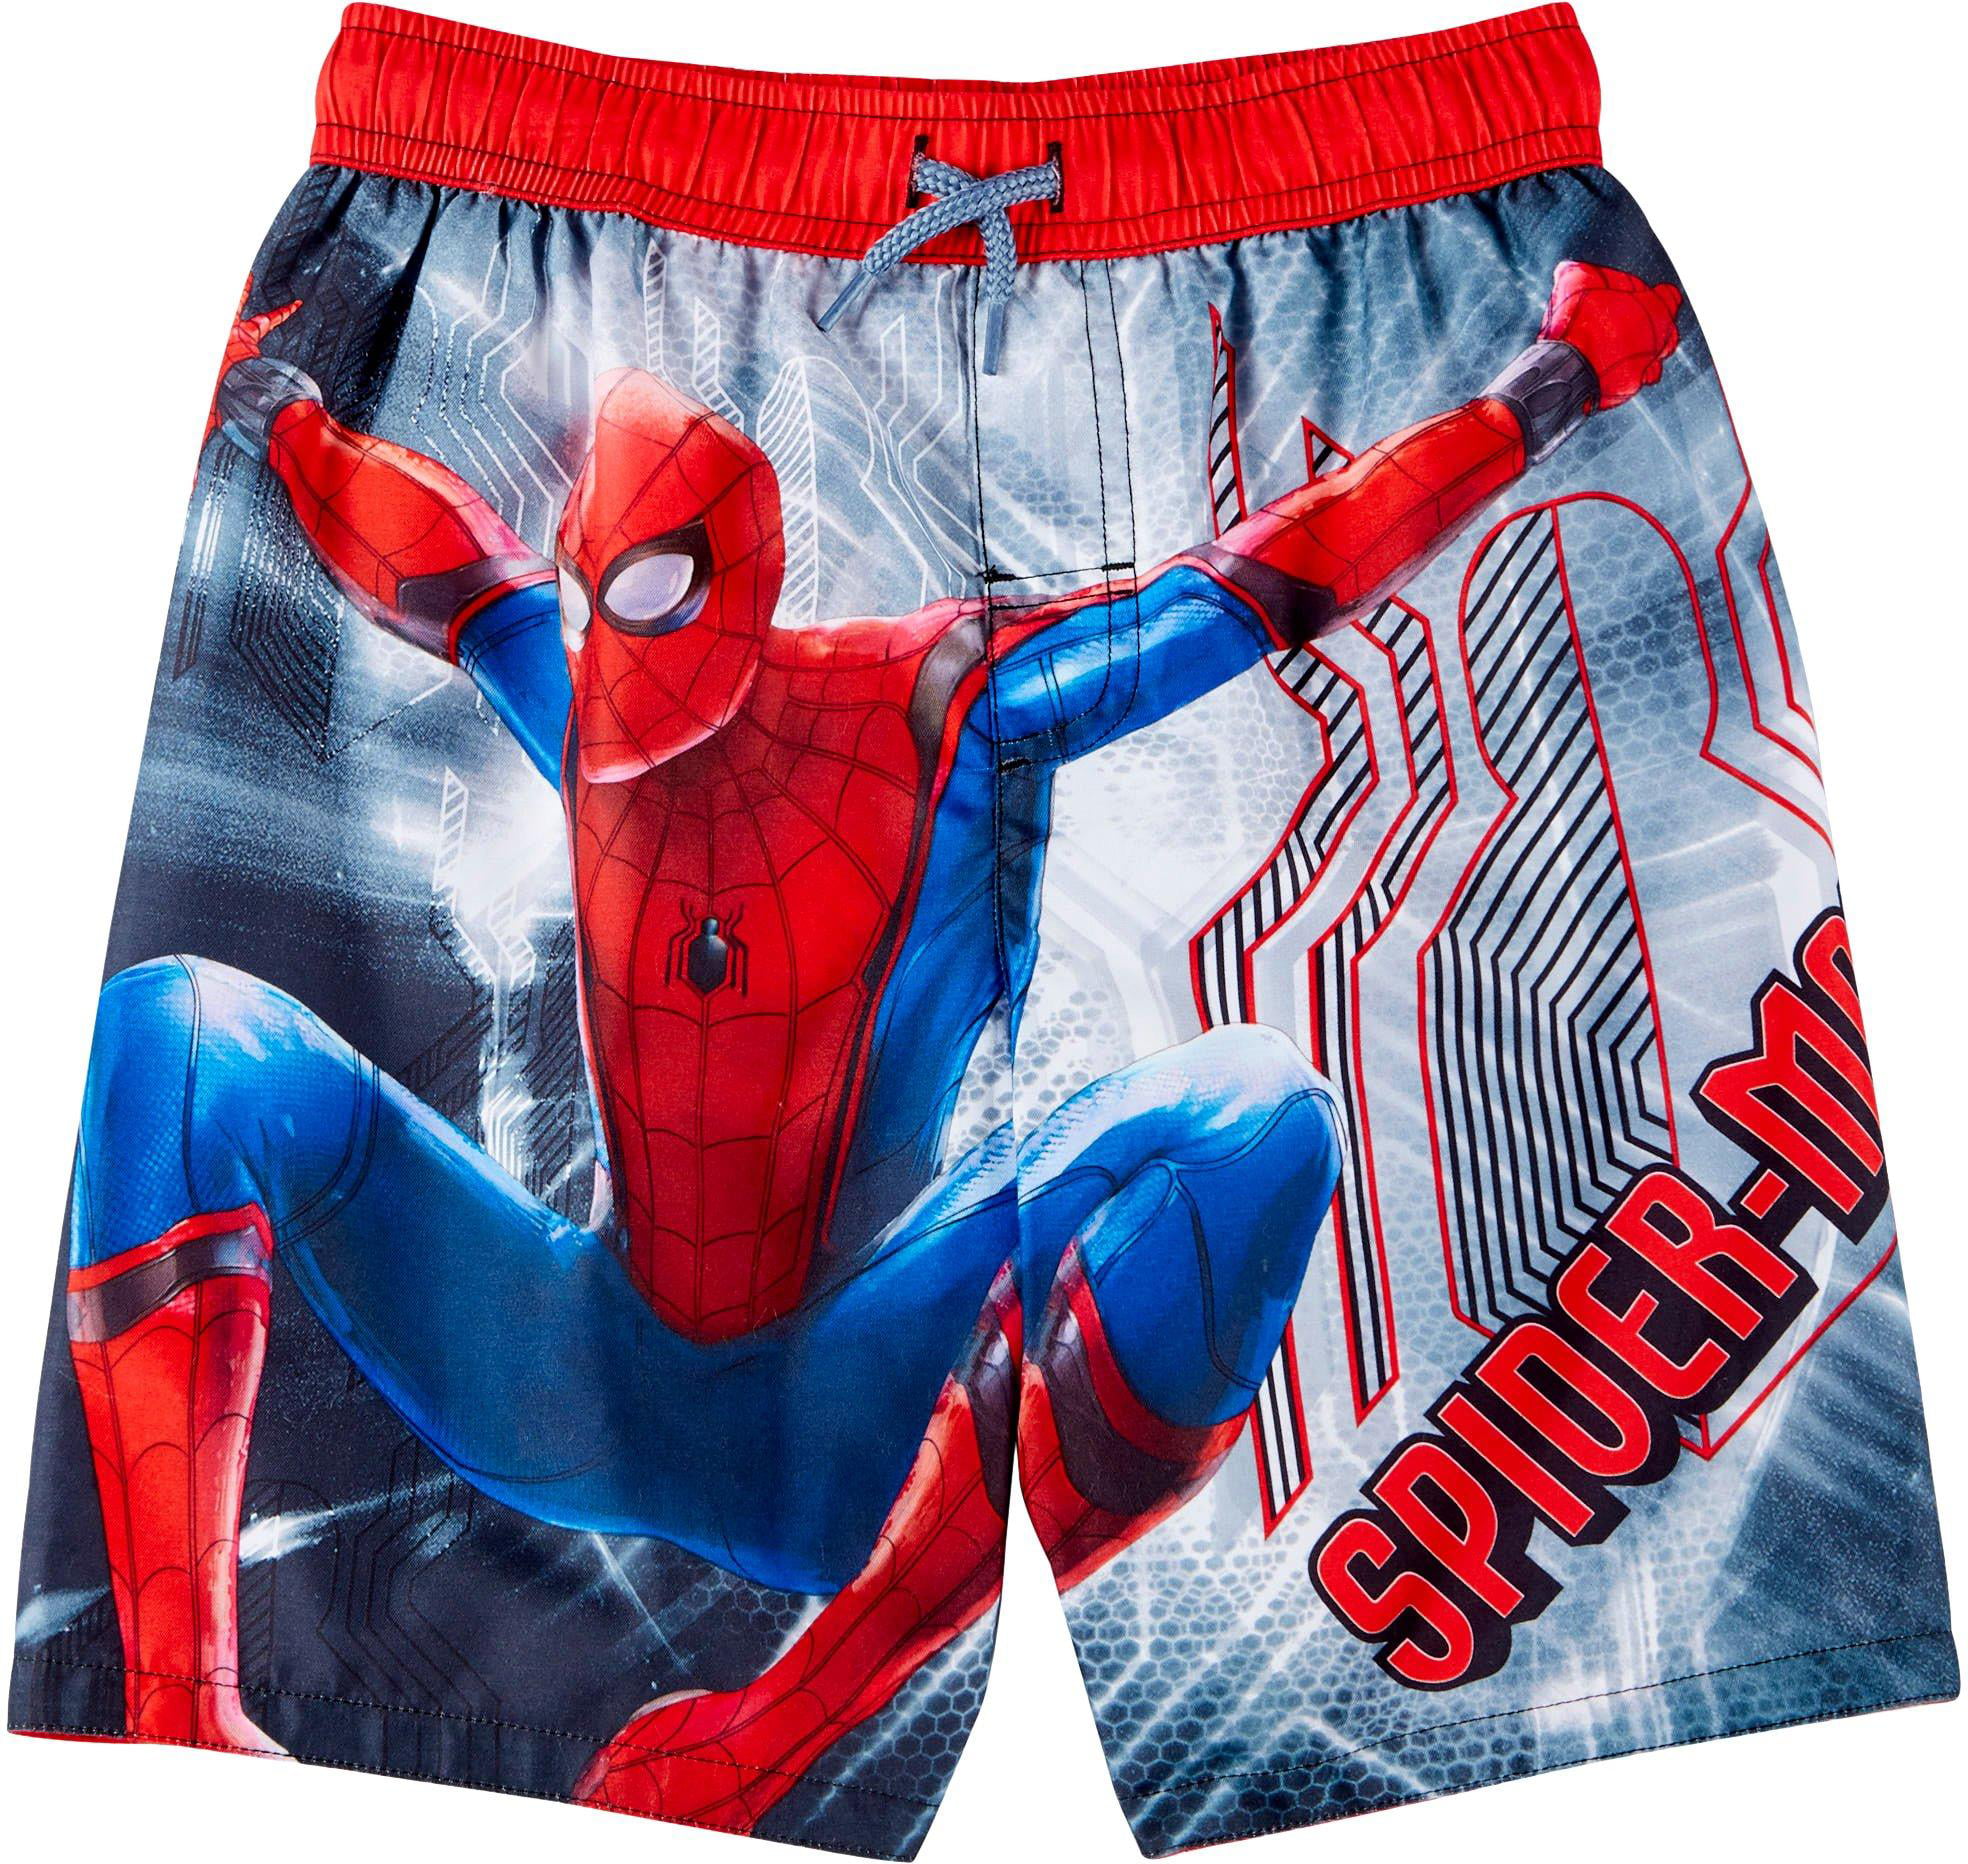 Marvel Ultimate Spider-Man Toddler Boys Red & Blue Swim Trunks Board Shorts 